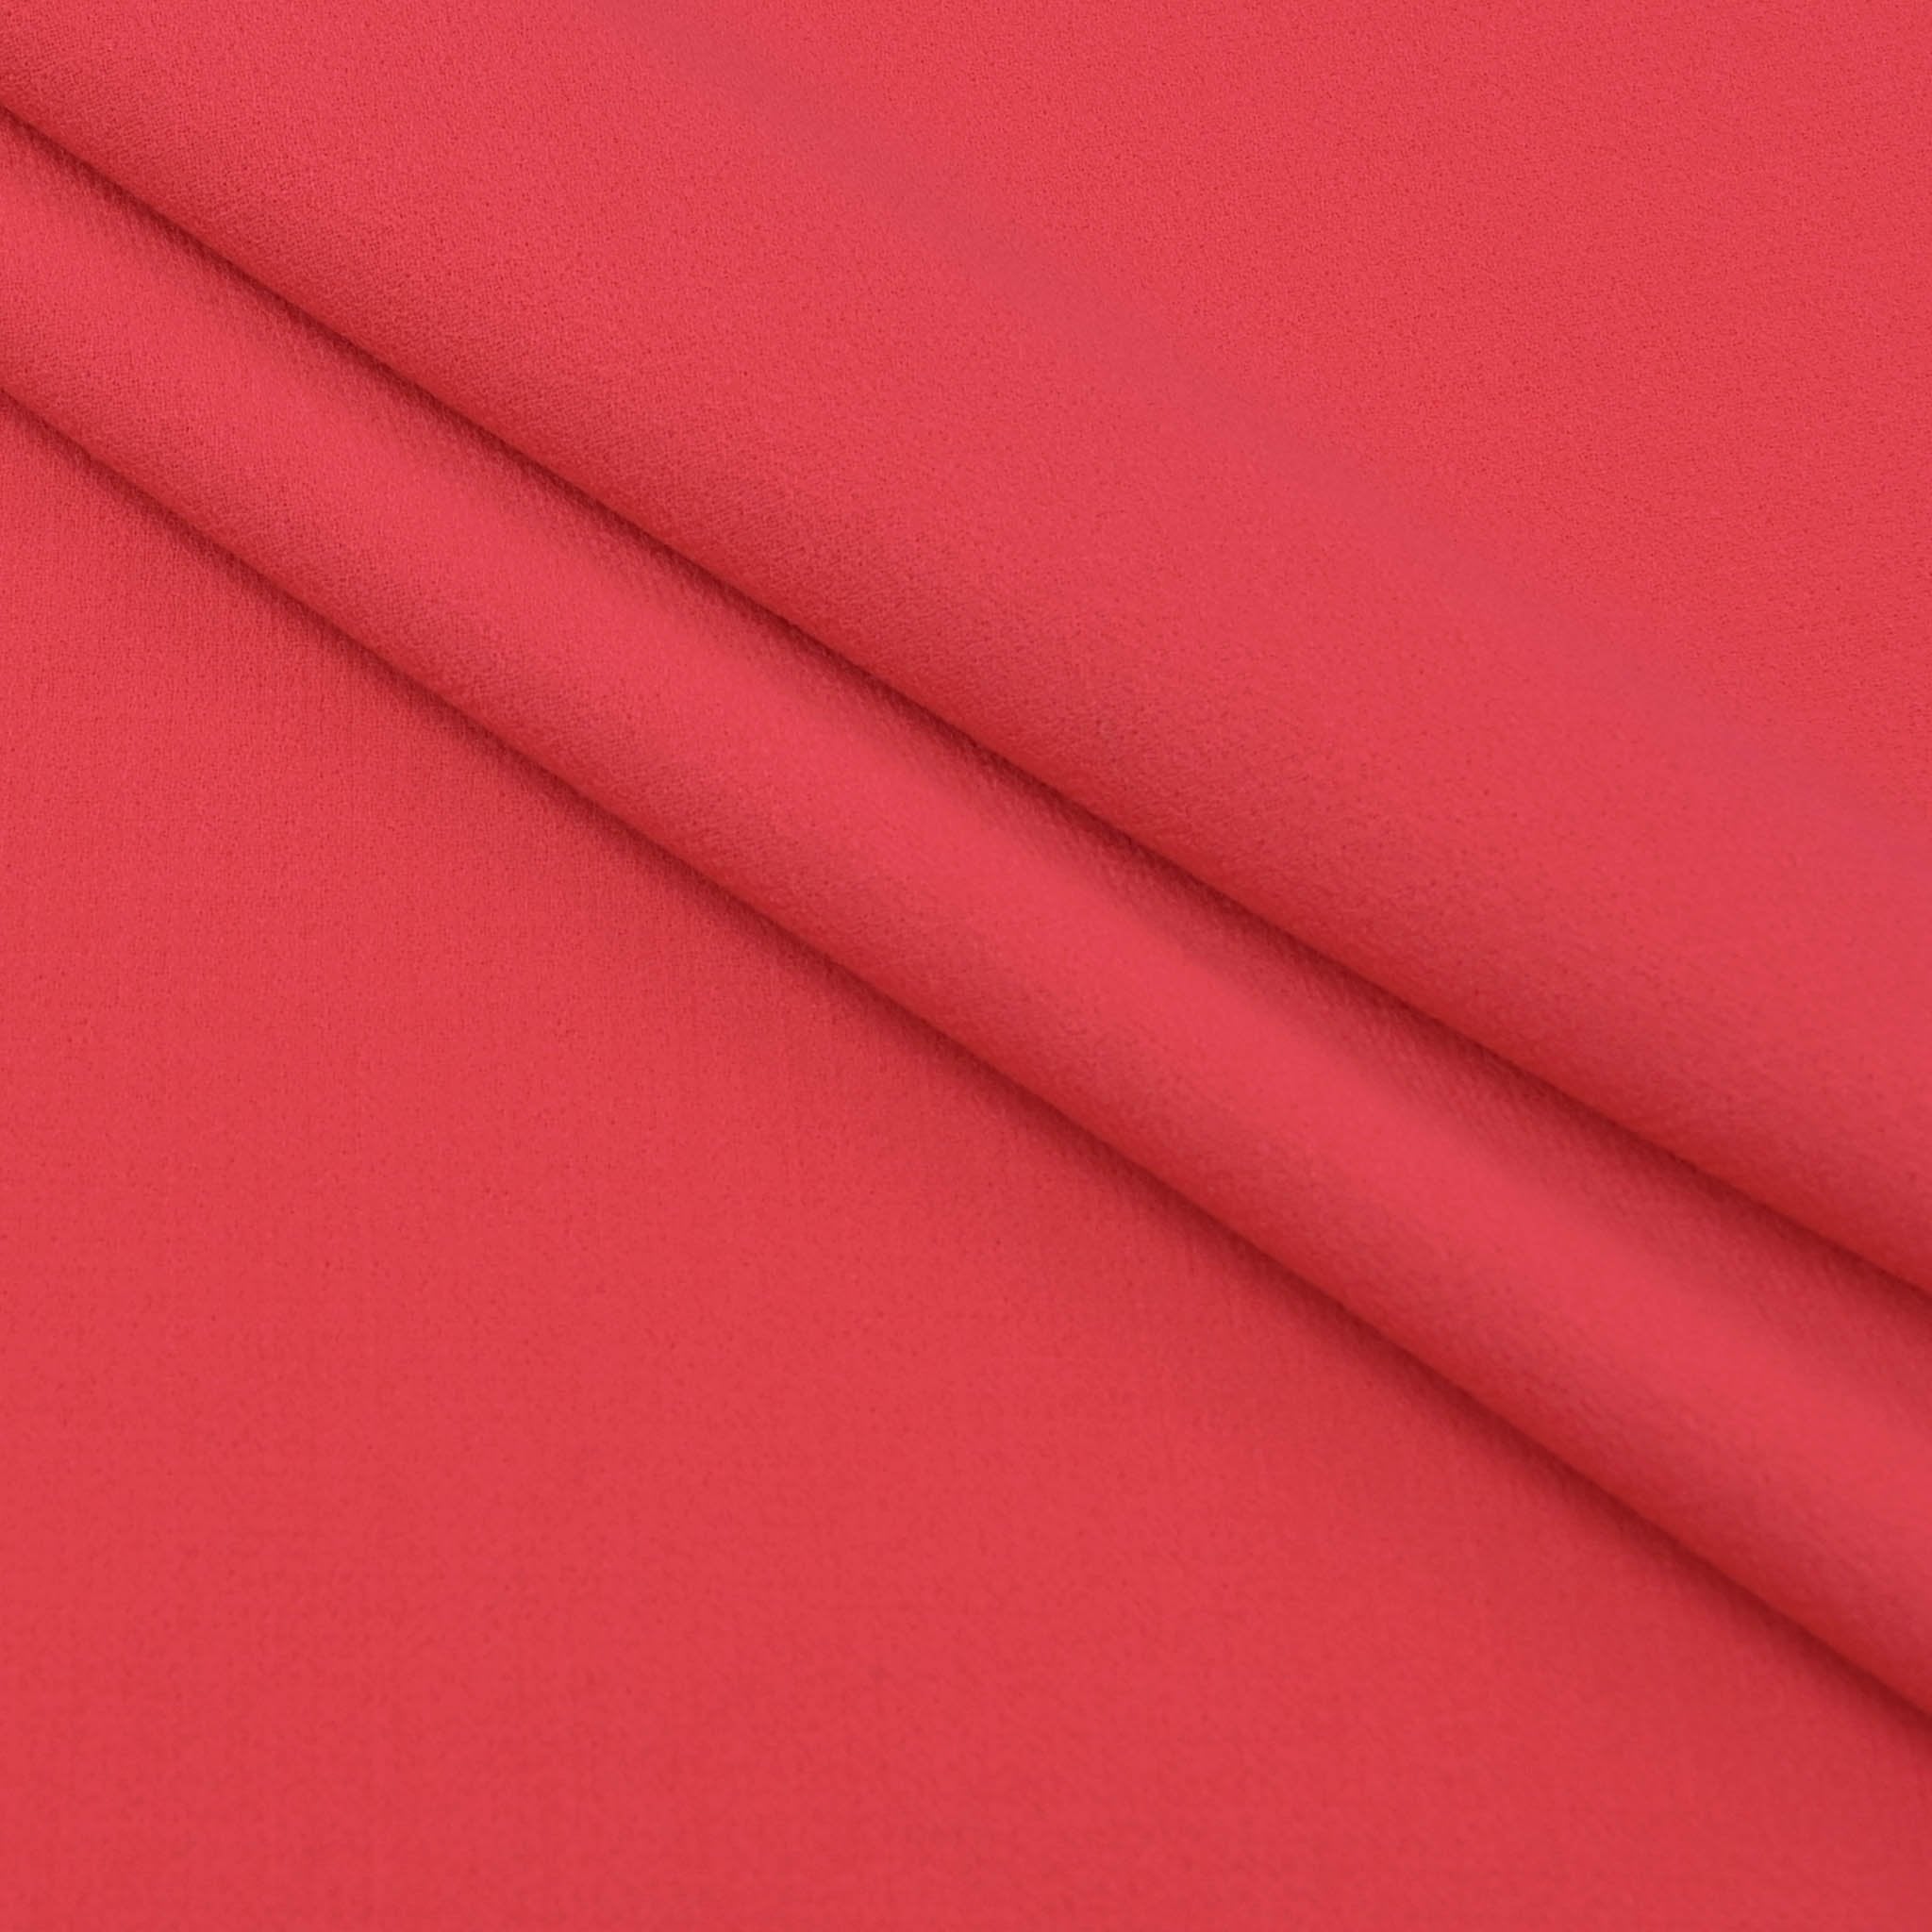 Raspberry Doublewave Crepe Fabric 98877